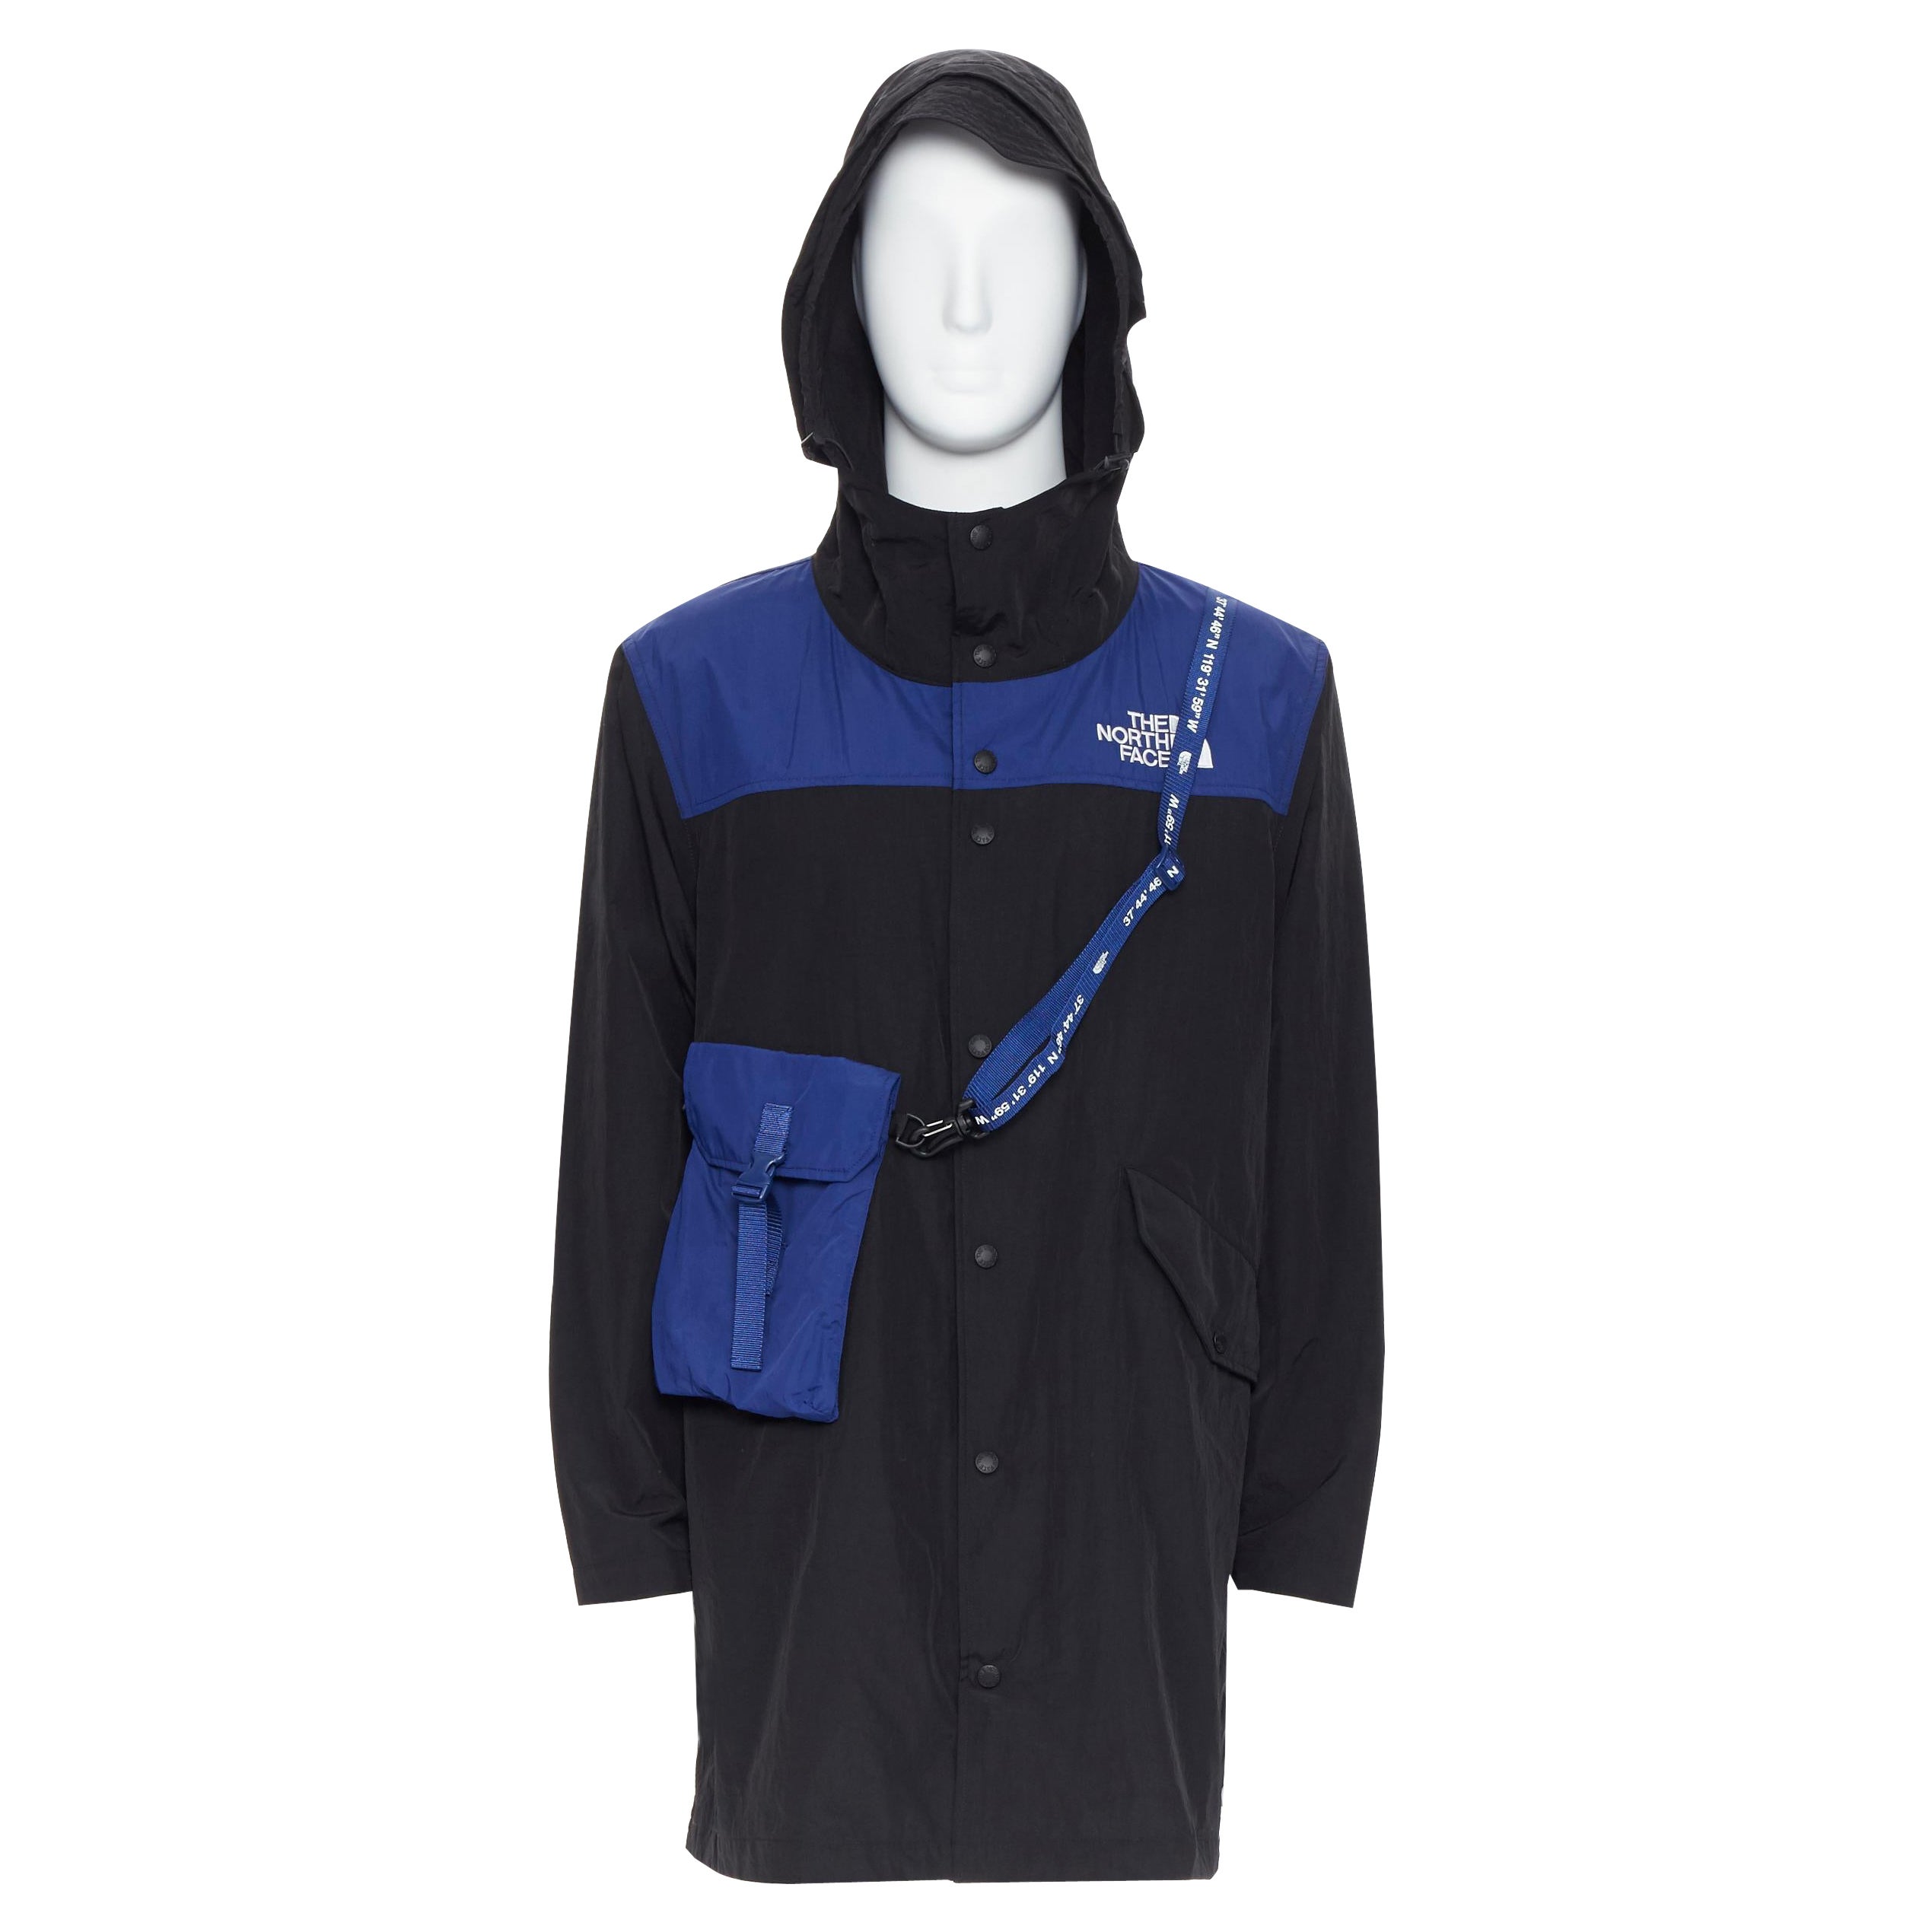 new THE NORTH FACE KAZUKI KARAISHI Black Flag Blue Bravo 2 long raincoat S / M